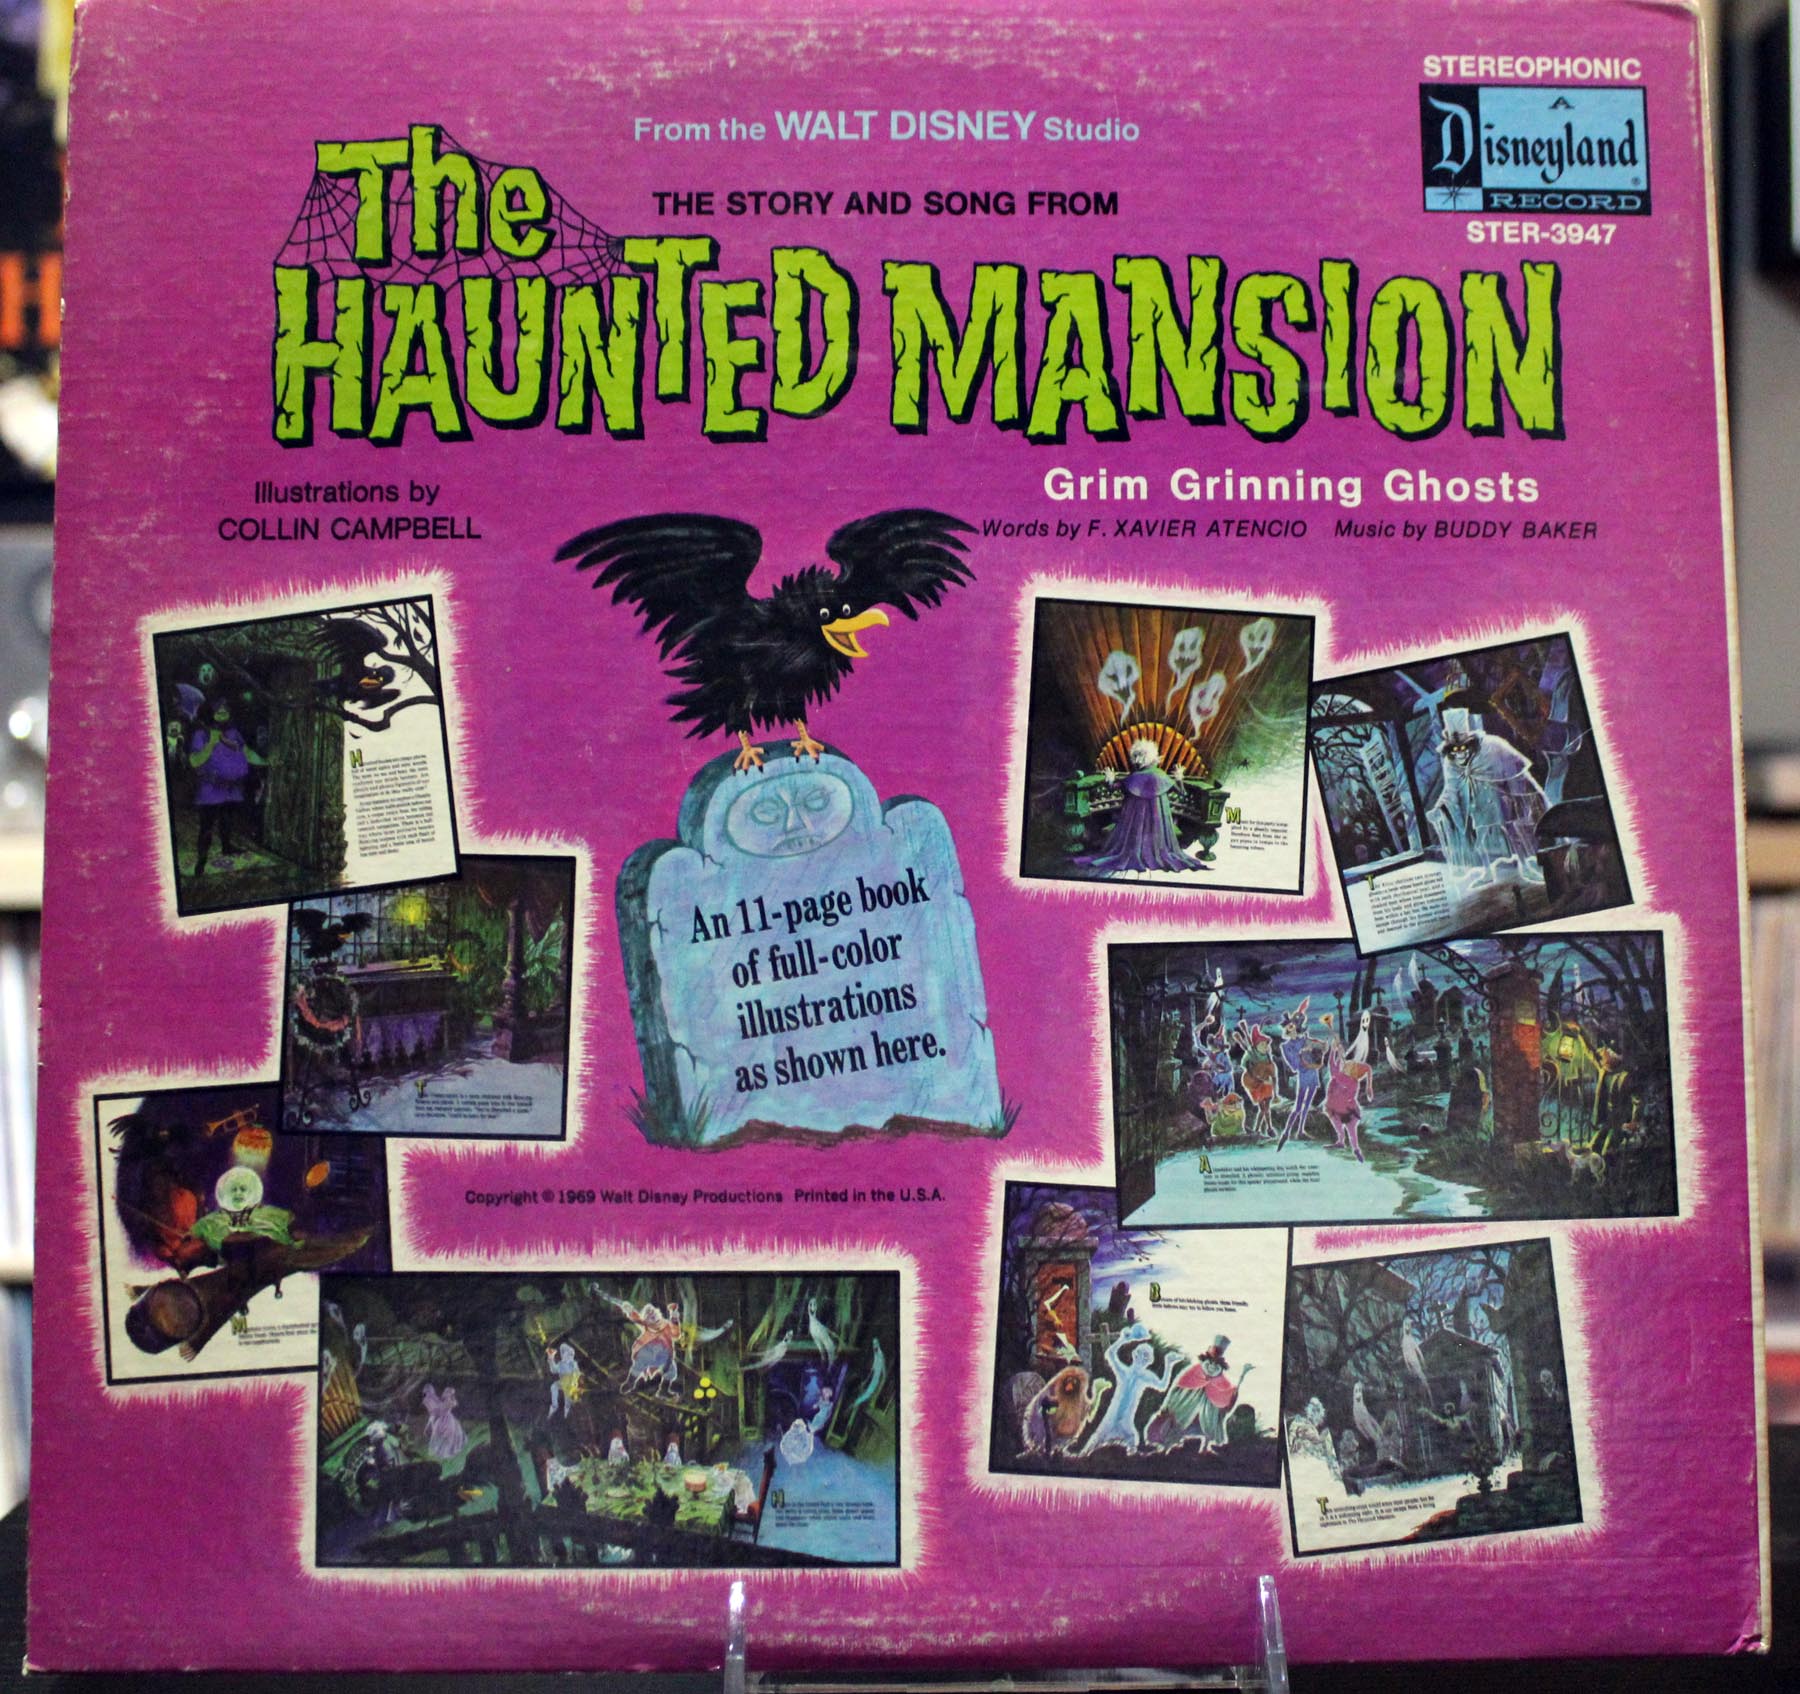 Spooky Vinyl: Halloween Records for Kids ‹ Modern Vinyl